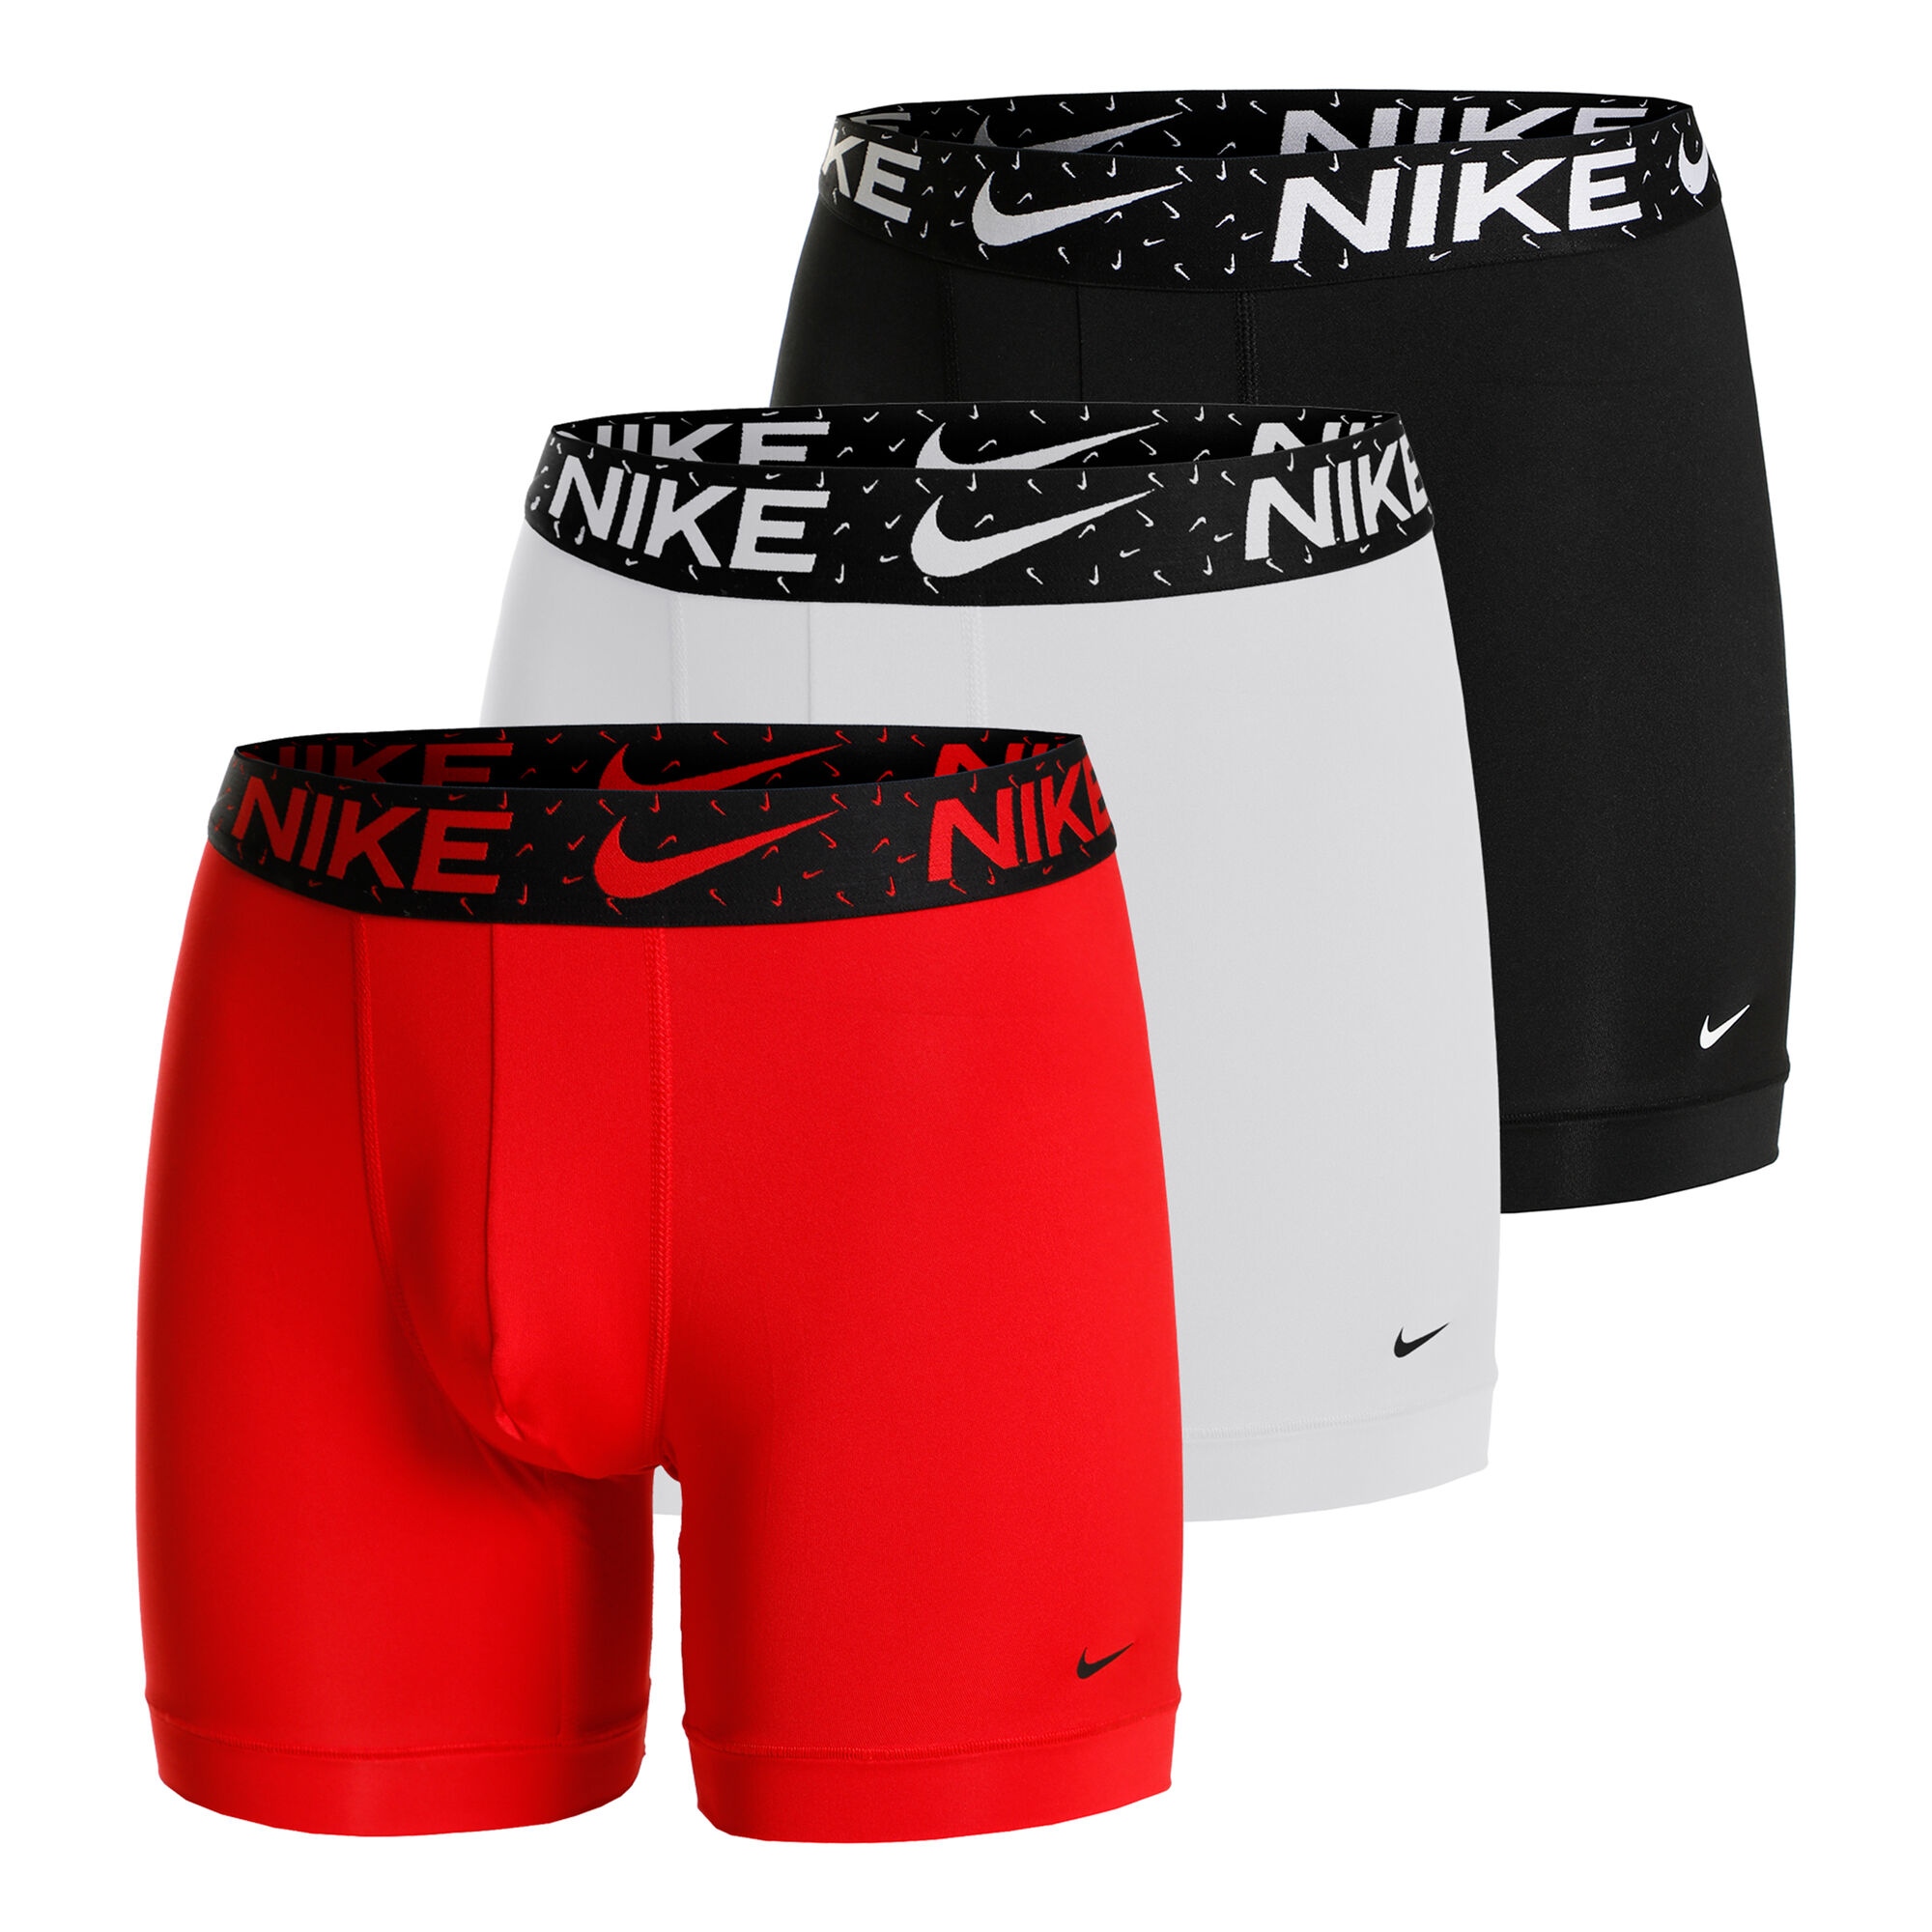 Nike Dri-Fit Briefs Calzoncillos Tipo Bóxer Pack De 3 Hombres - compra online | Tennis-Point